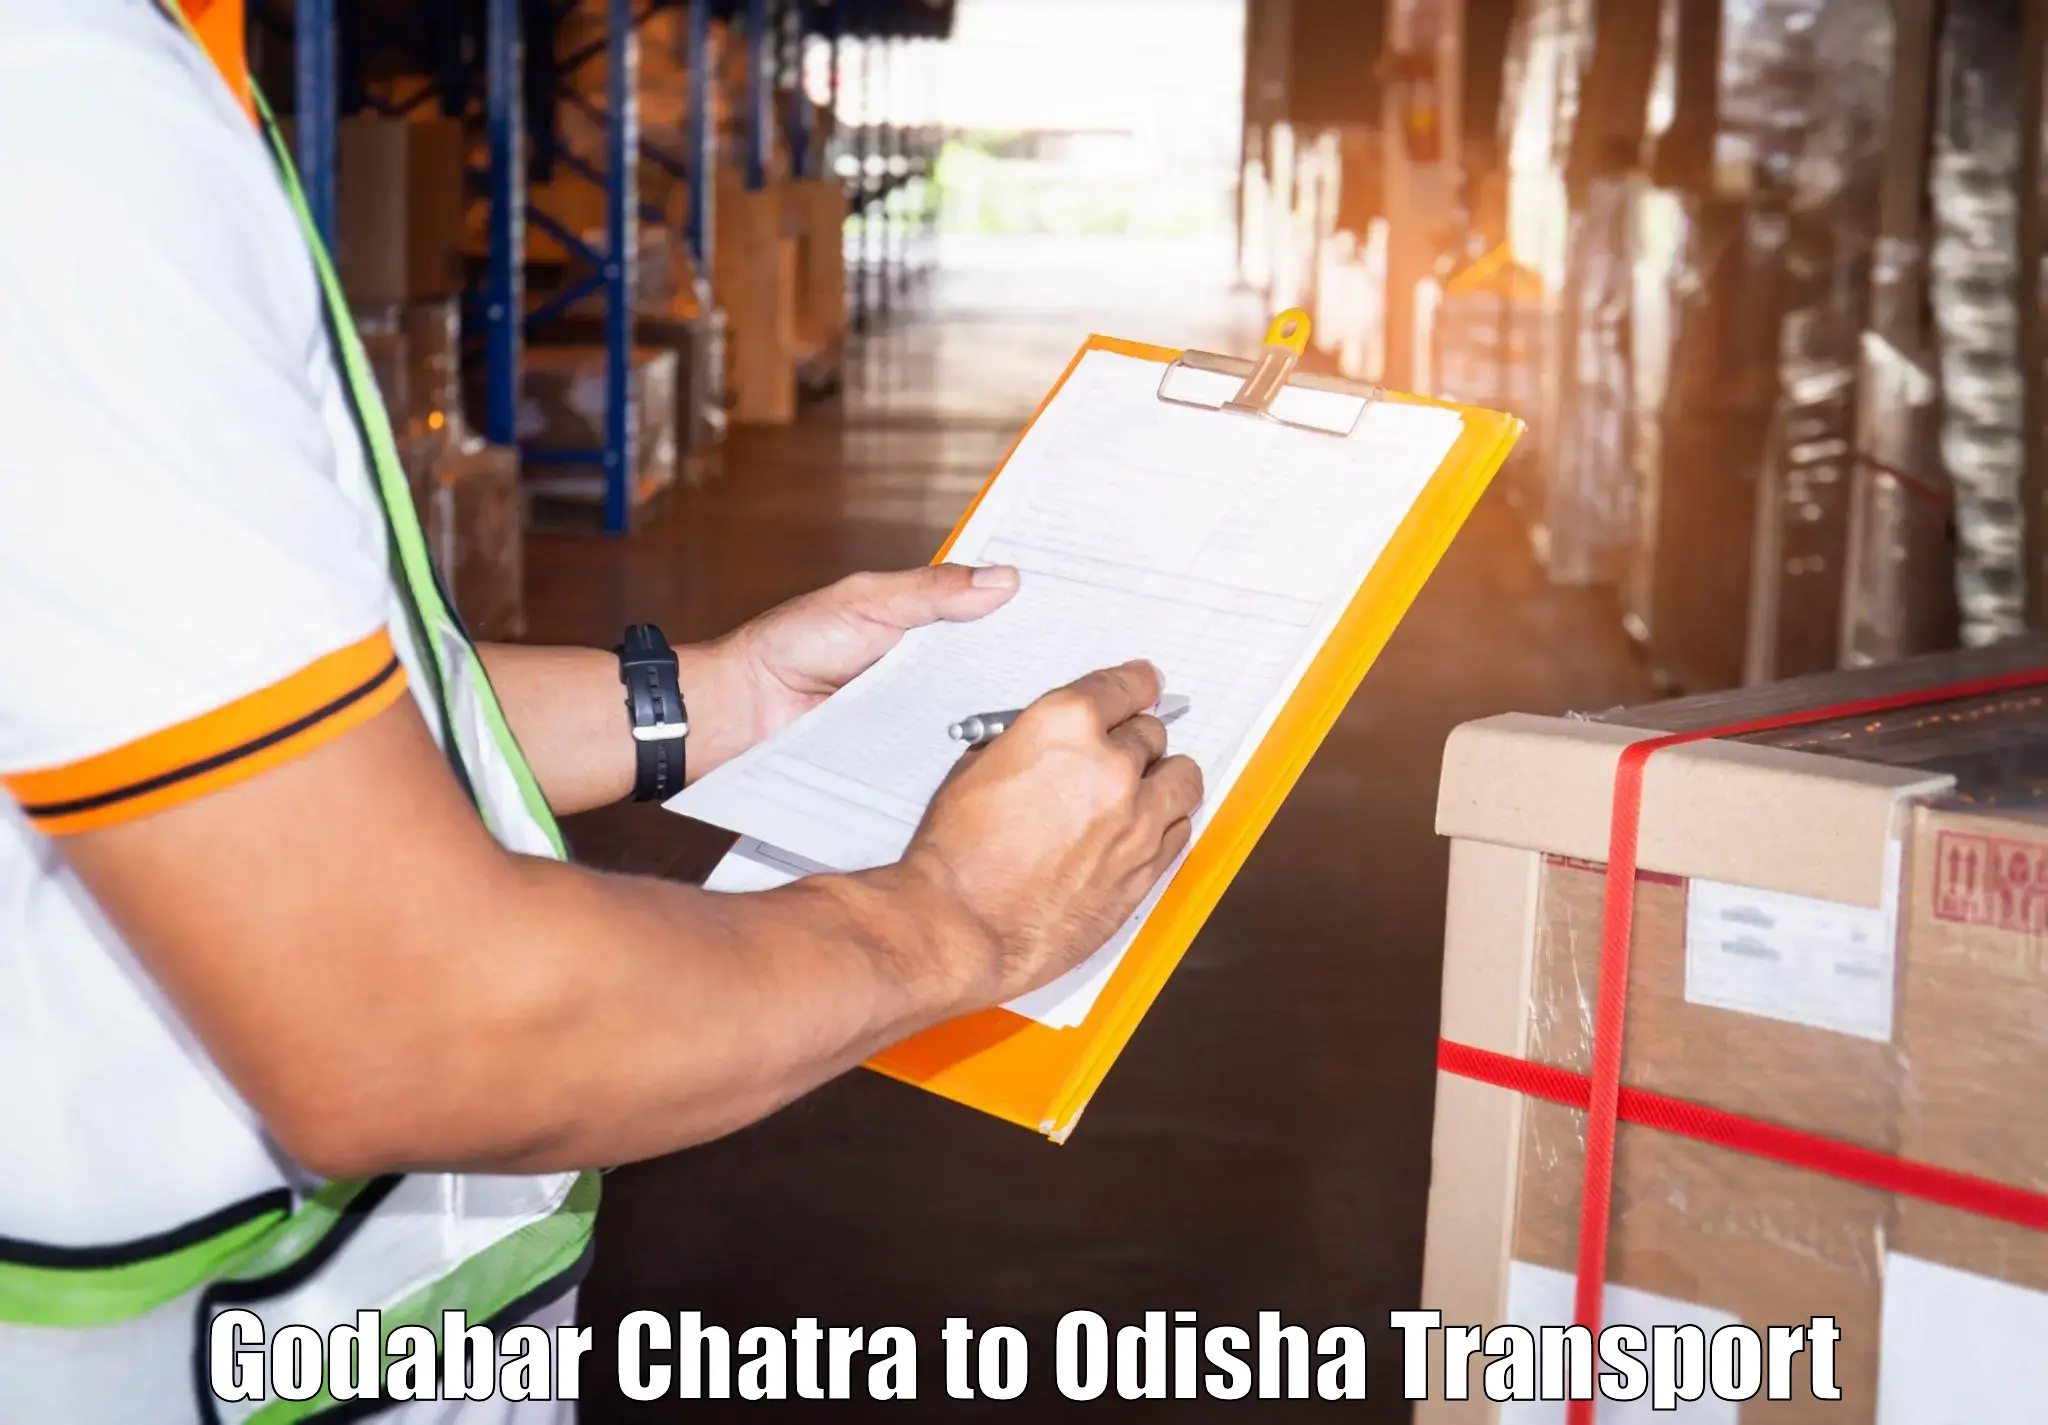 Cargo transport services Godabar Chatra to Gunupur